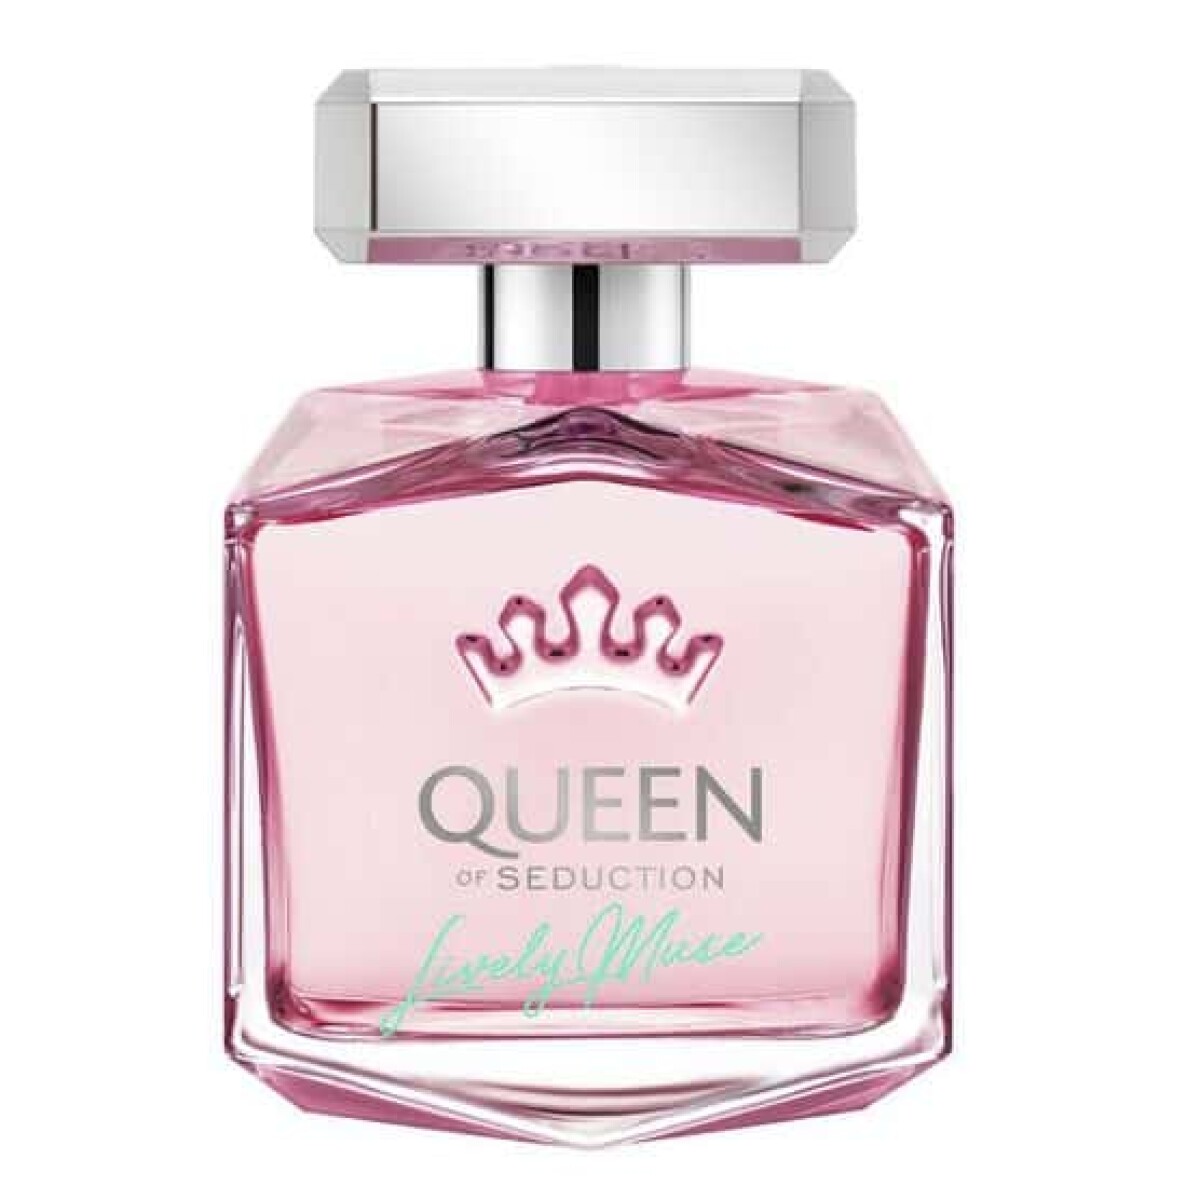 Perfume Antonio Banderas Queen Of Seduction Lively Muse Edt 50 ml 